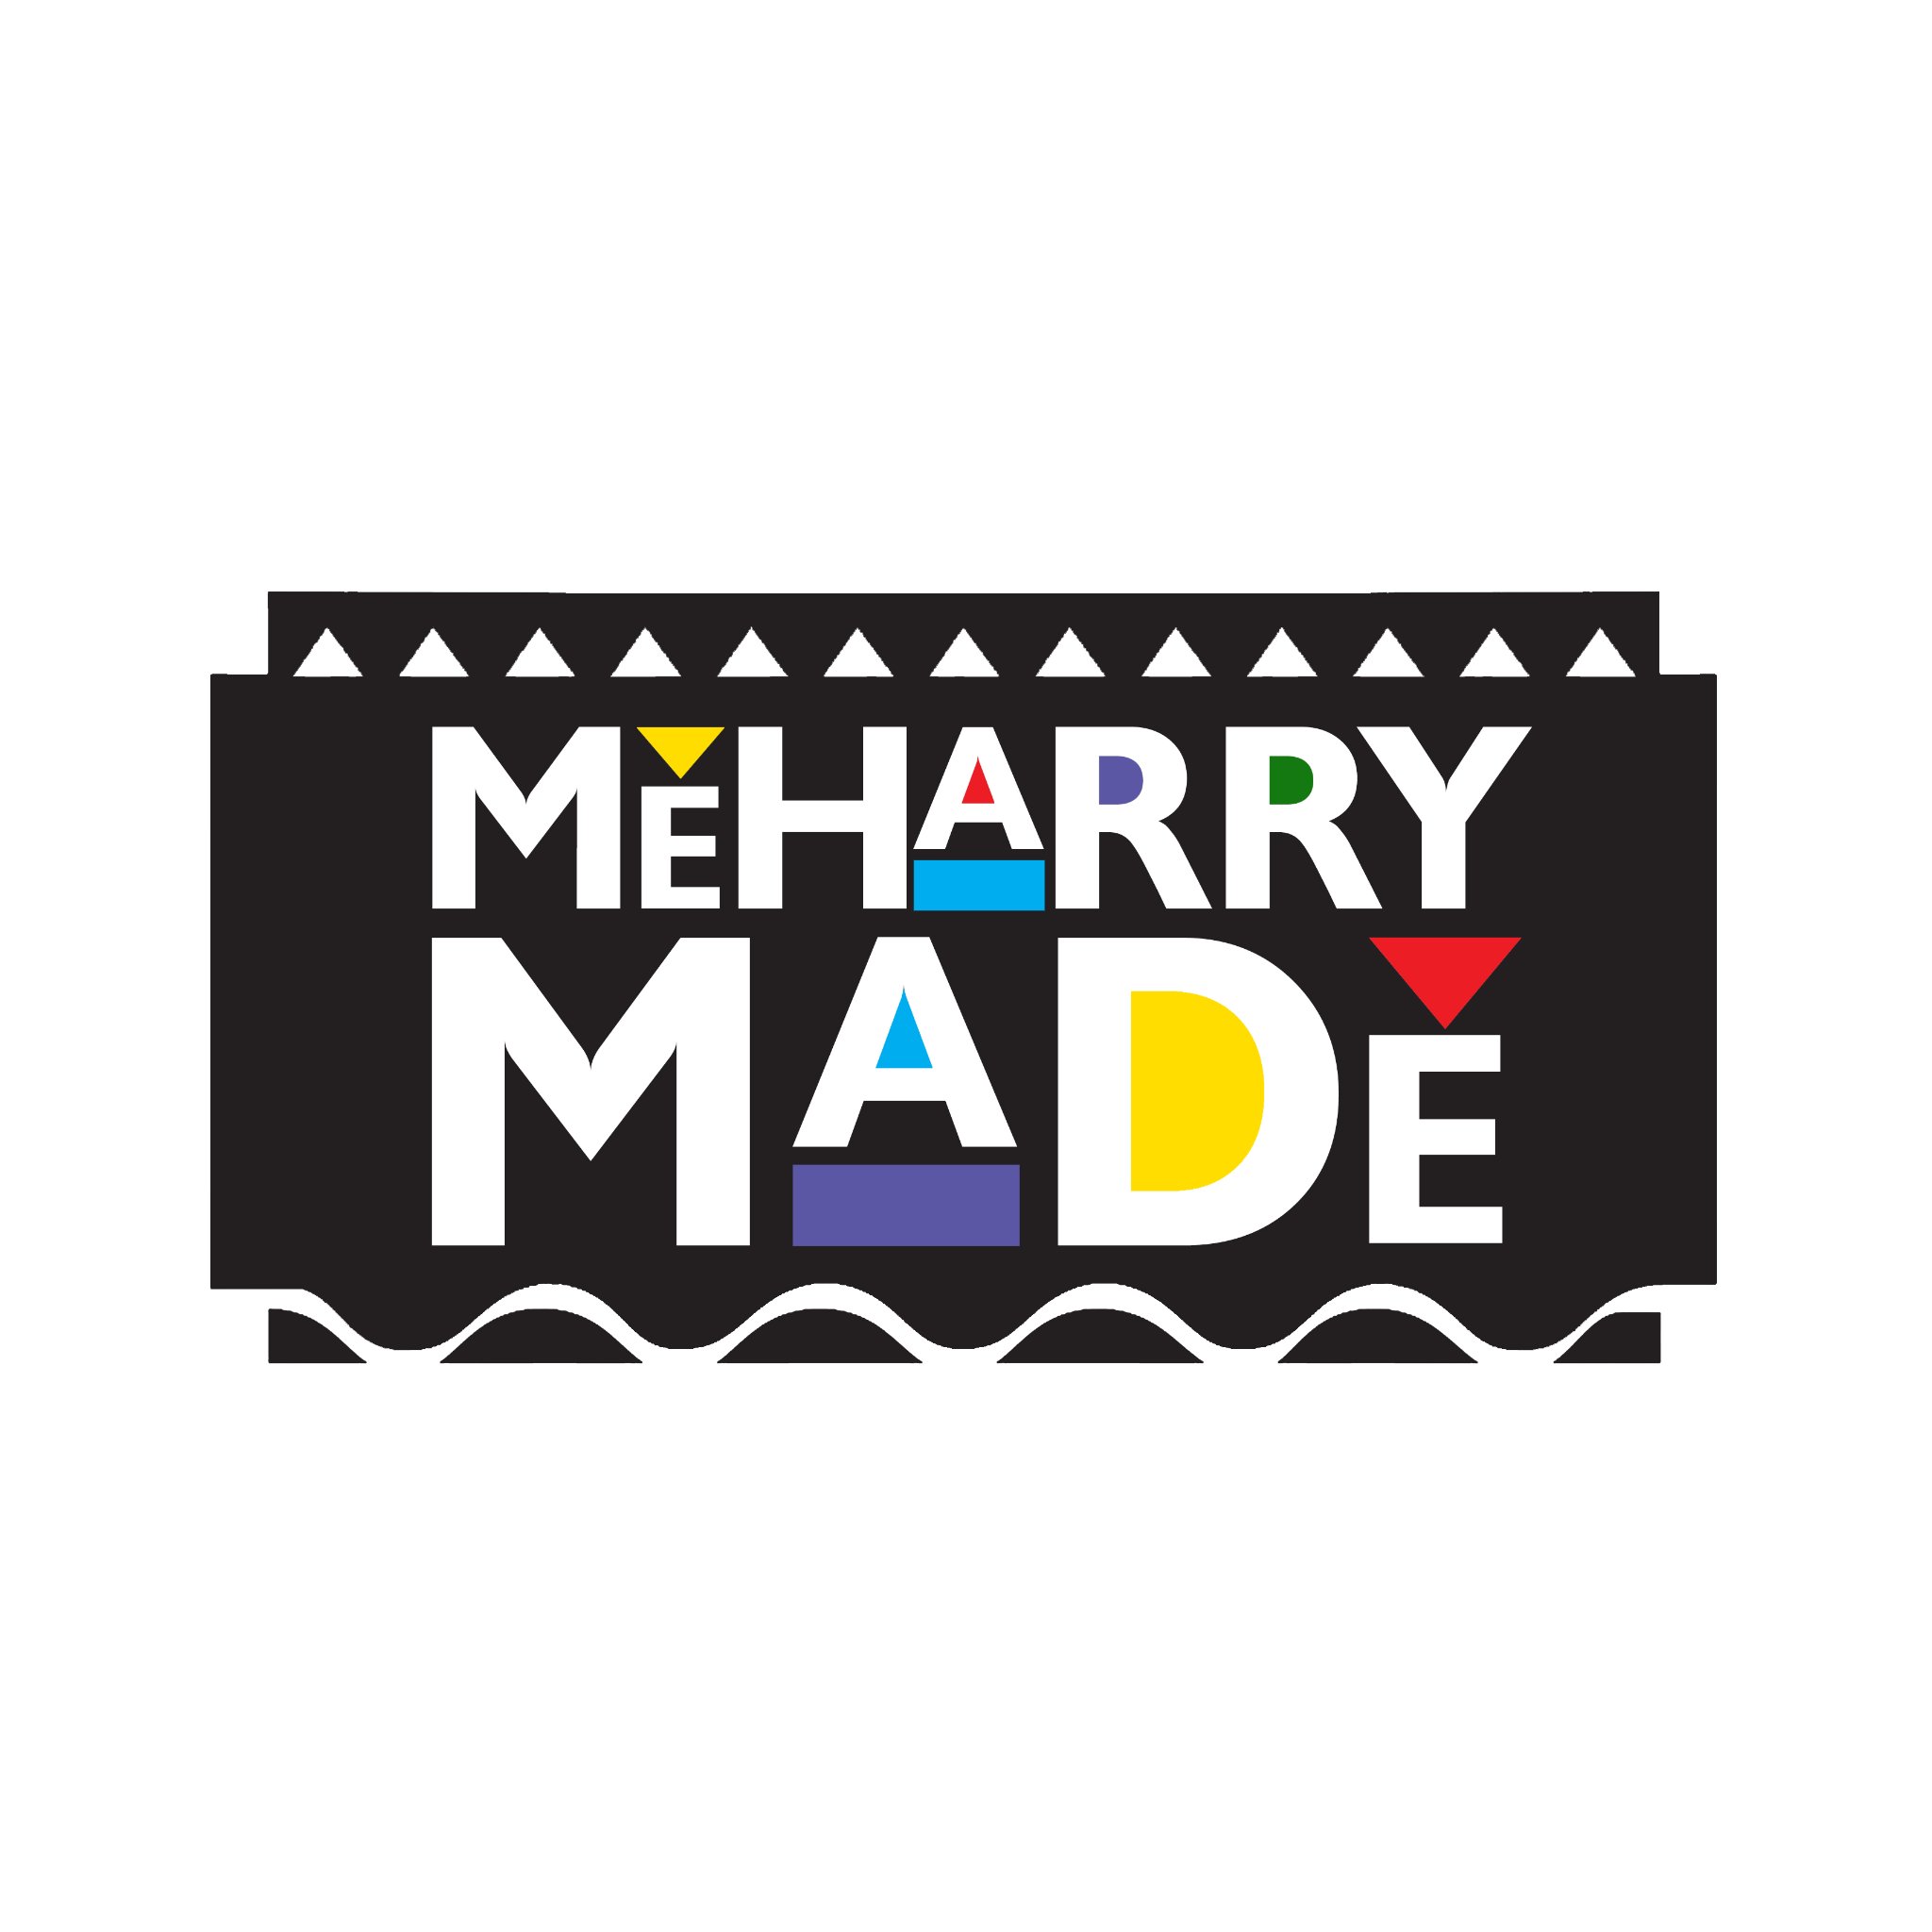 Follow us on IG @MeharryMade and Facebook @TheMeharryMade